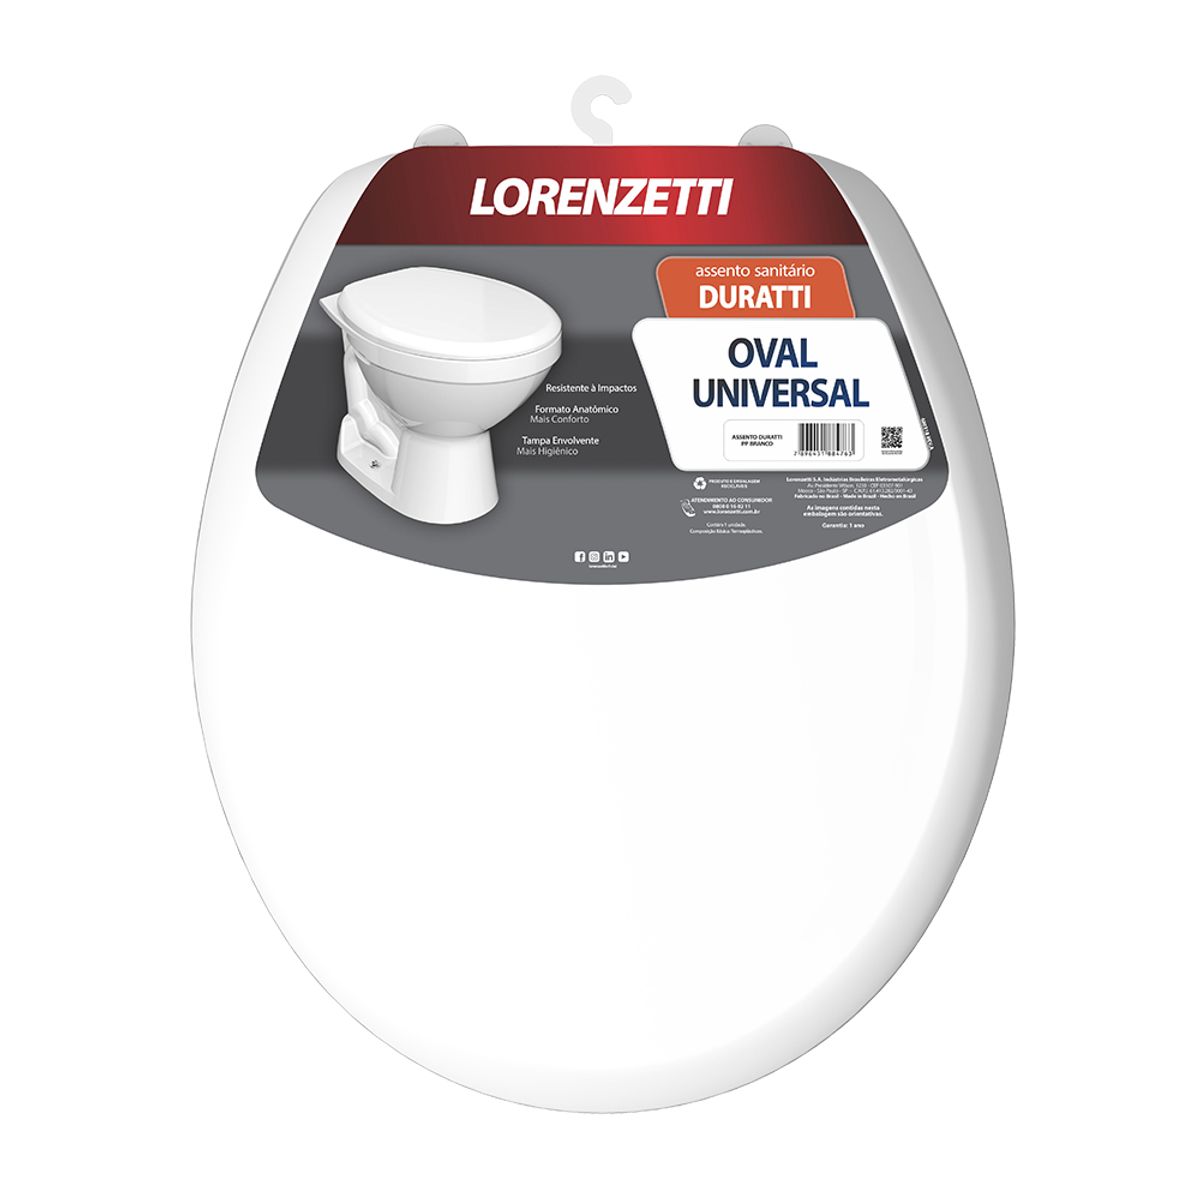 Assento Sanitário Lorenzetti Duratti Oval Universal